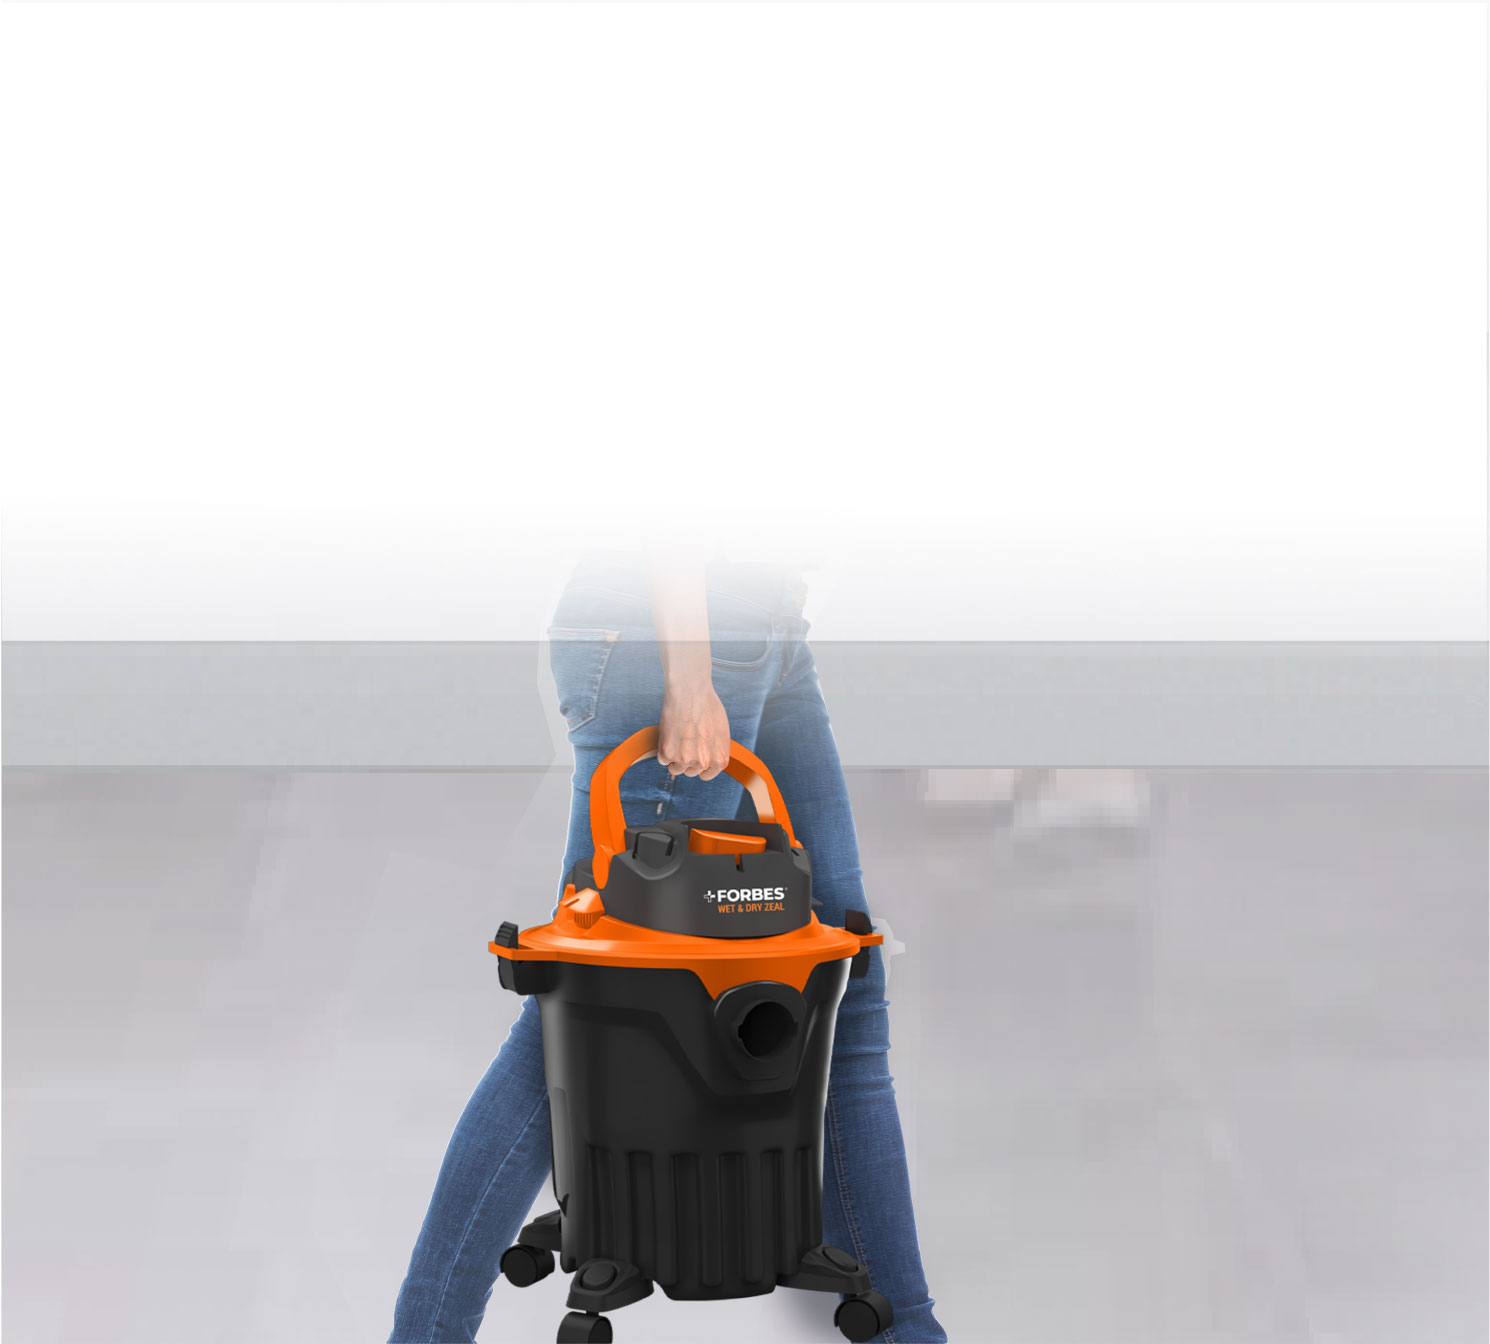 Eureka Forbes ZEAL Wet & Dry Vacuum Cleaner with Reusable Dust Bag (Black, Orange)